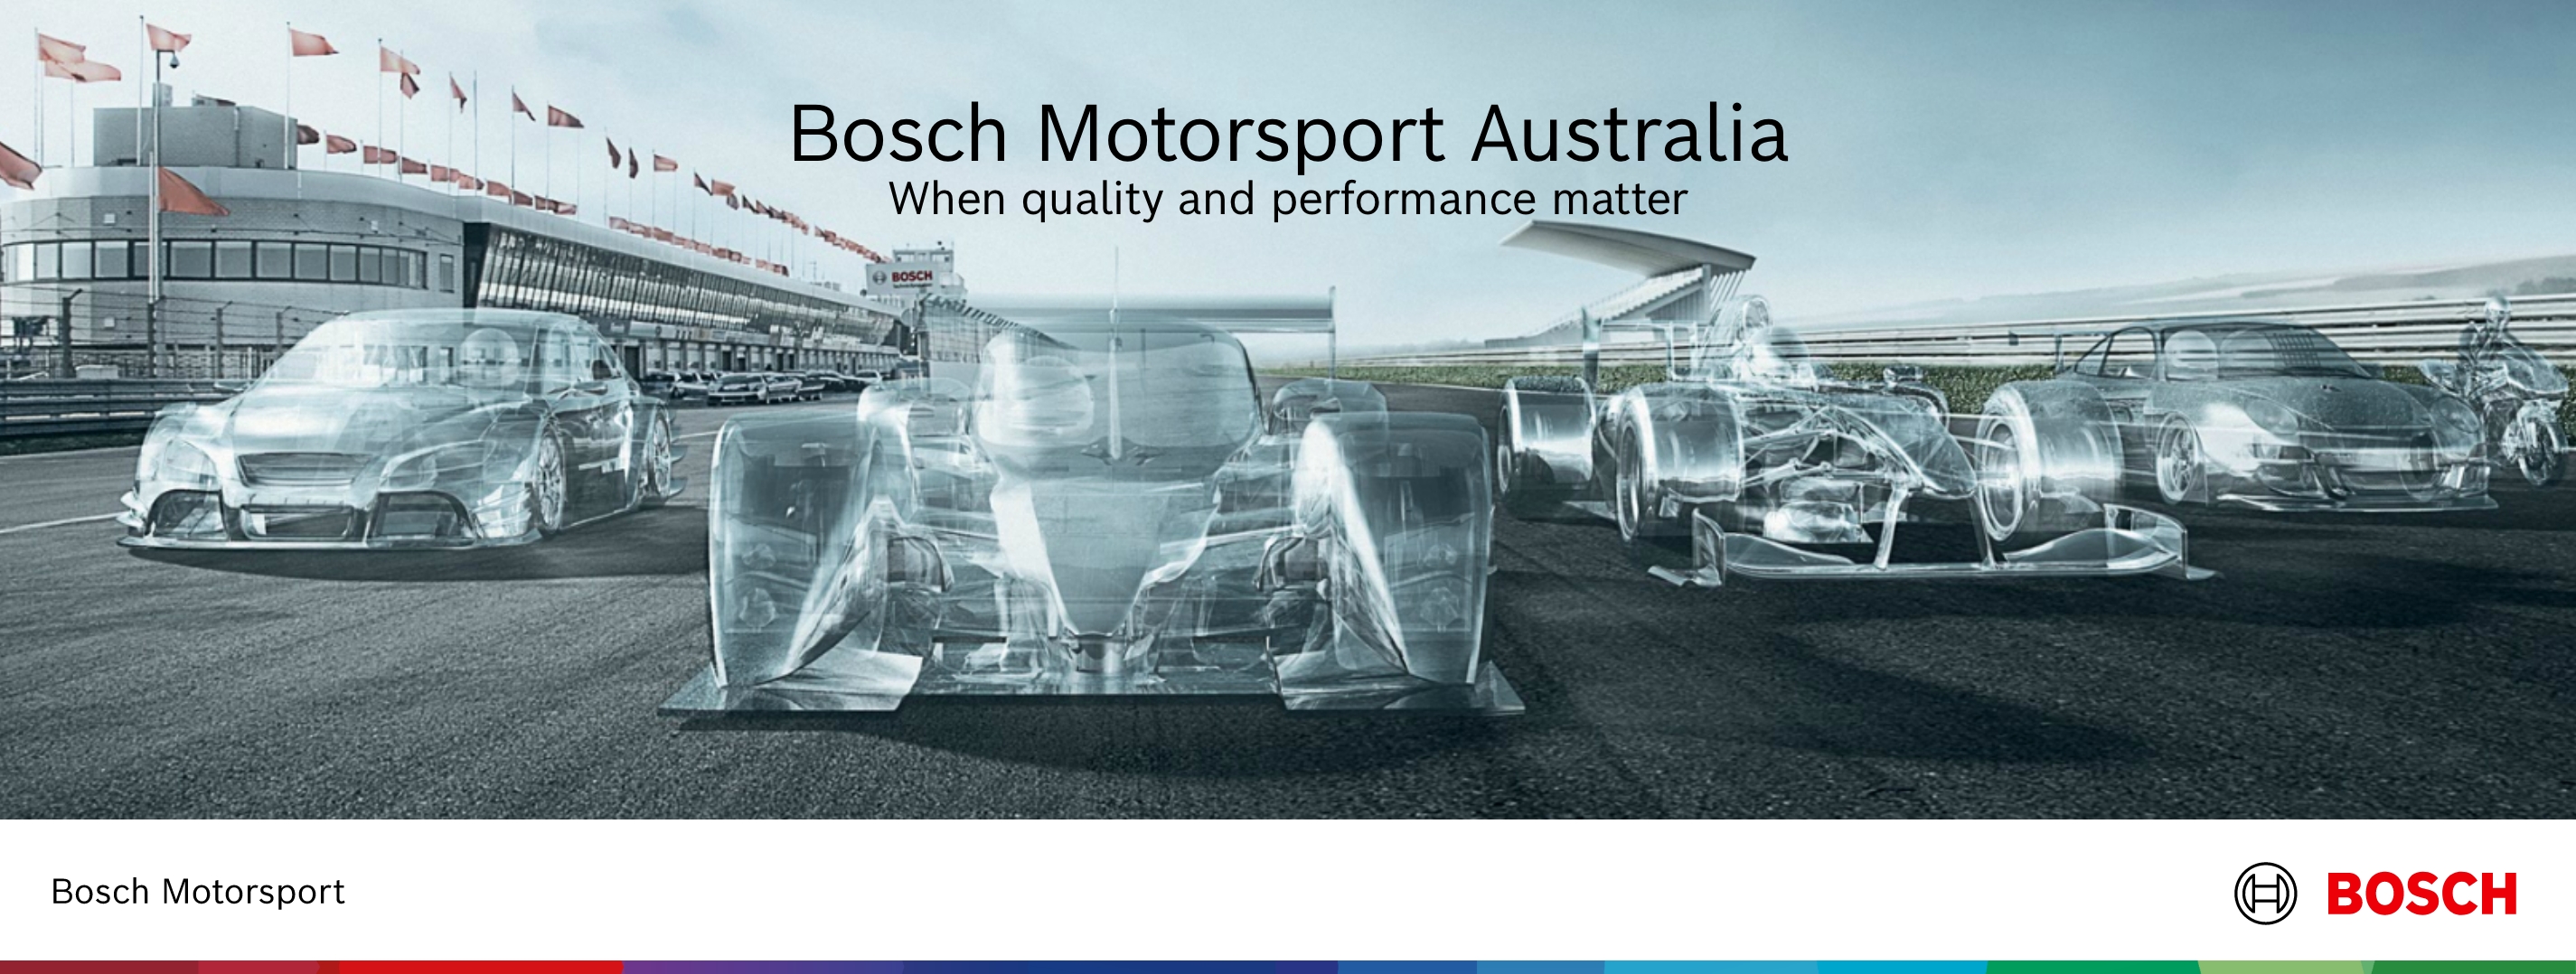 Bosch Motorsport Australia, New Zealand & South Africa - Online